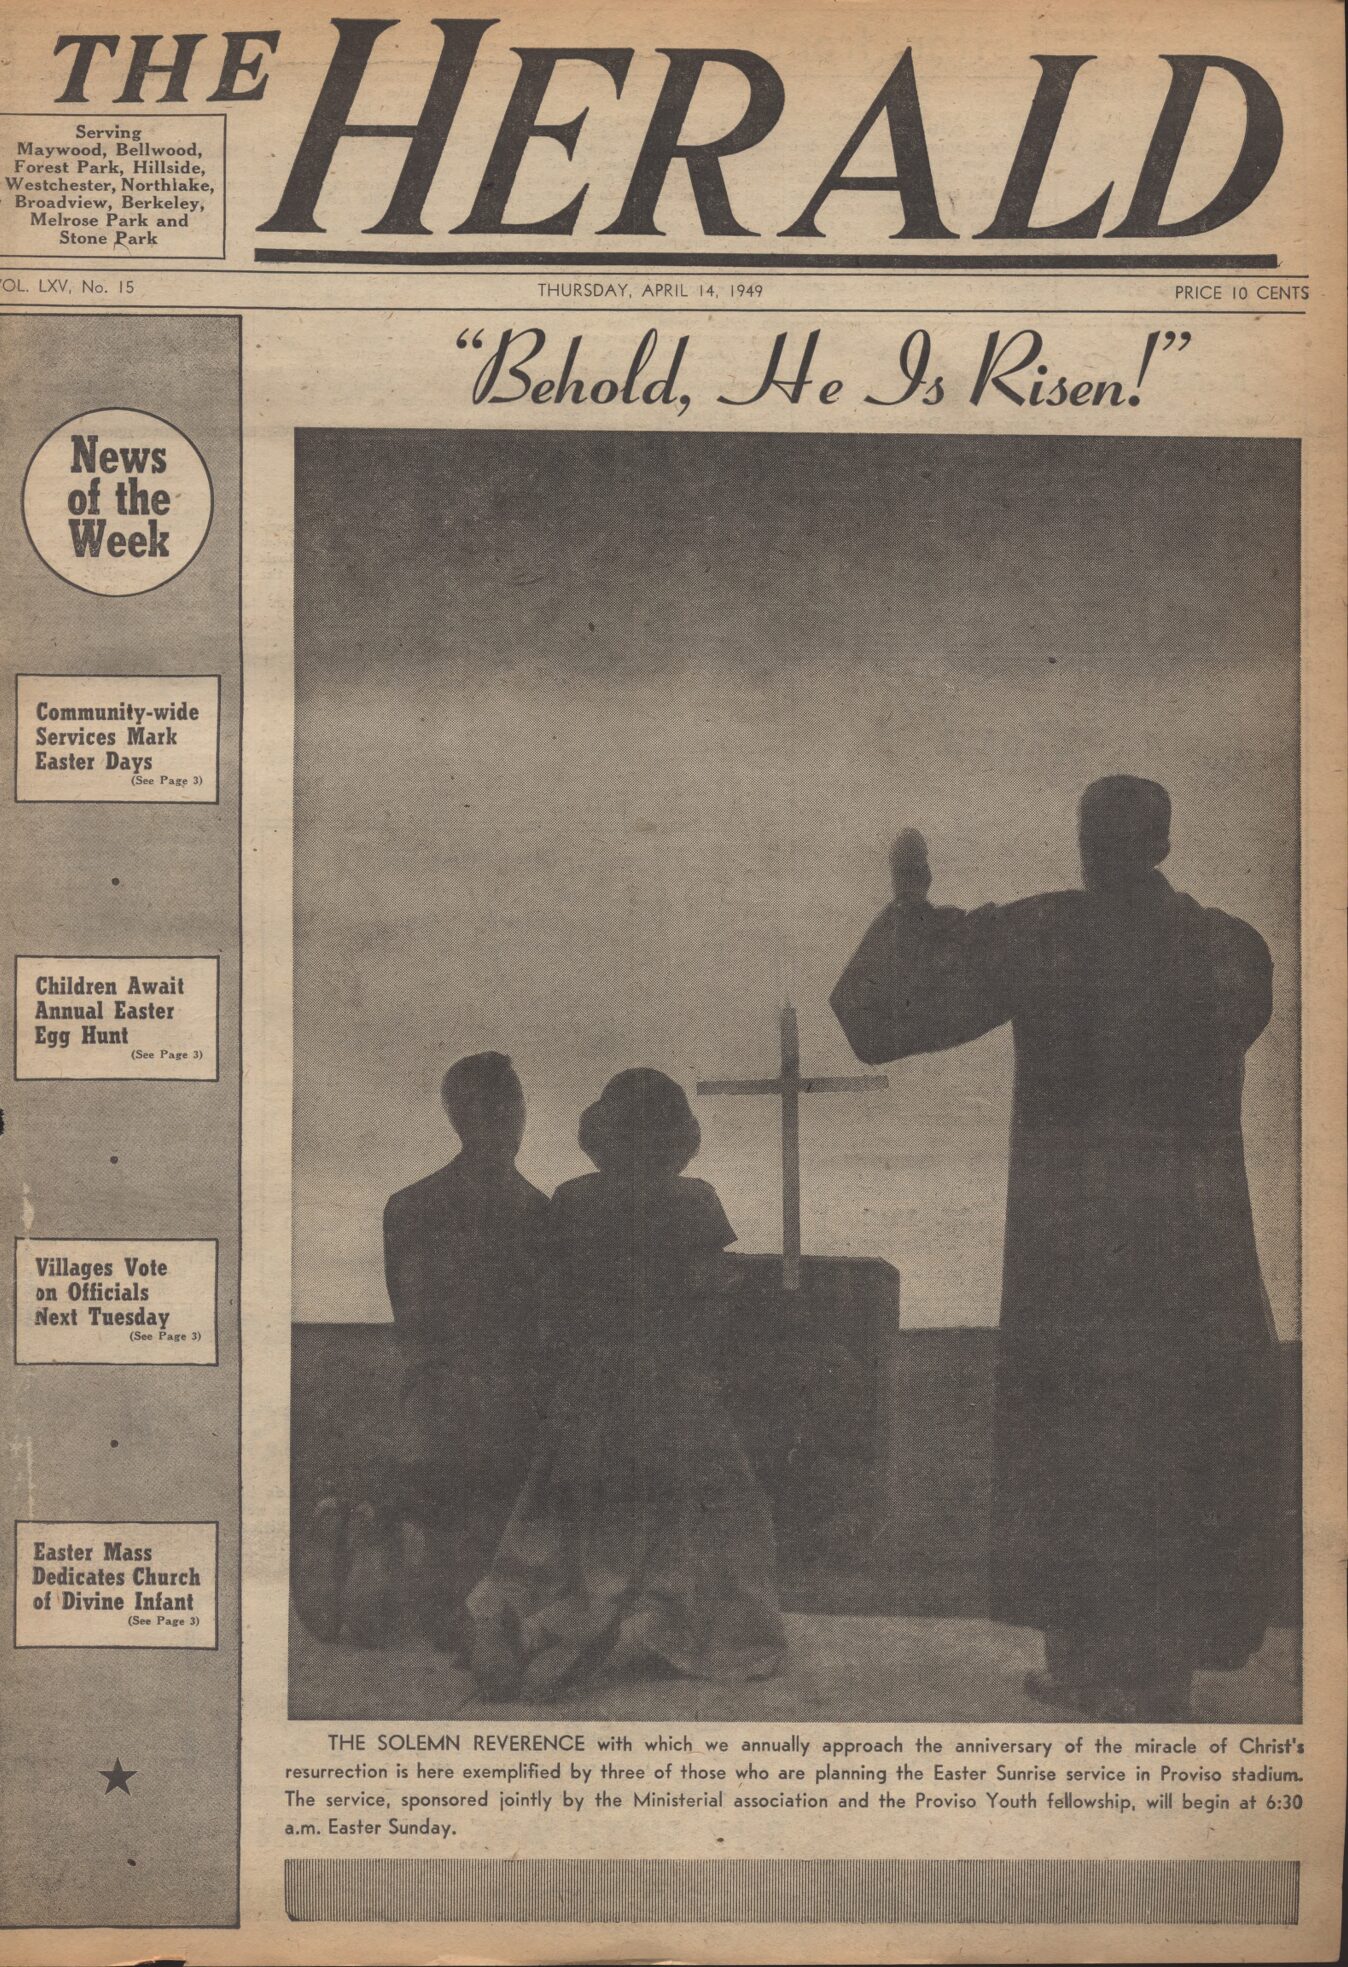 The Herald – 19490414